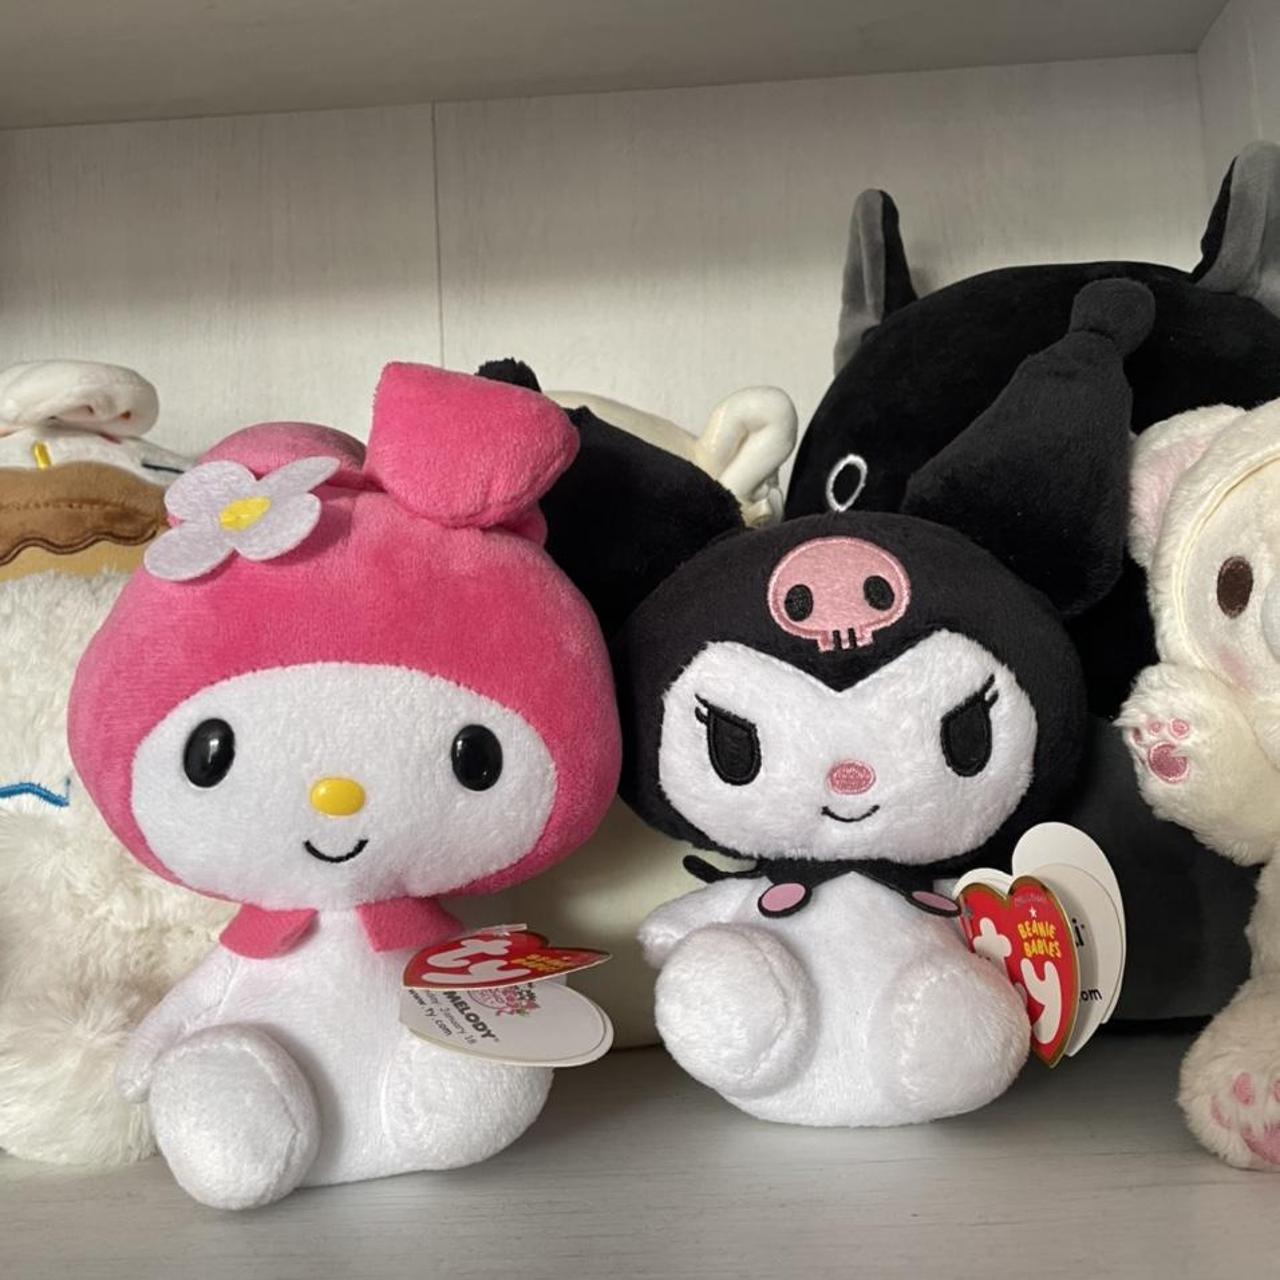 Sanrio Stuffed-animals | Depop